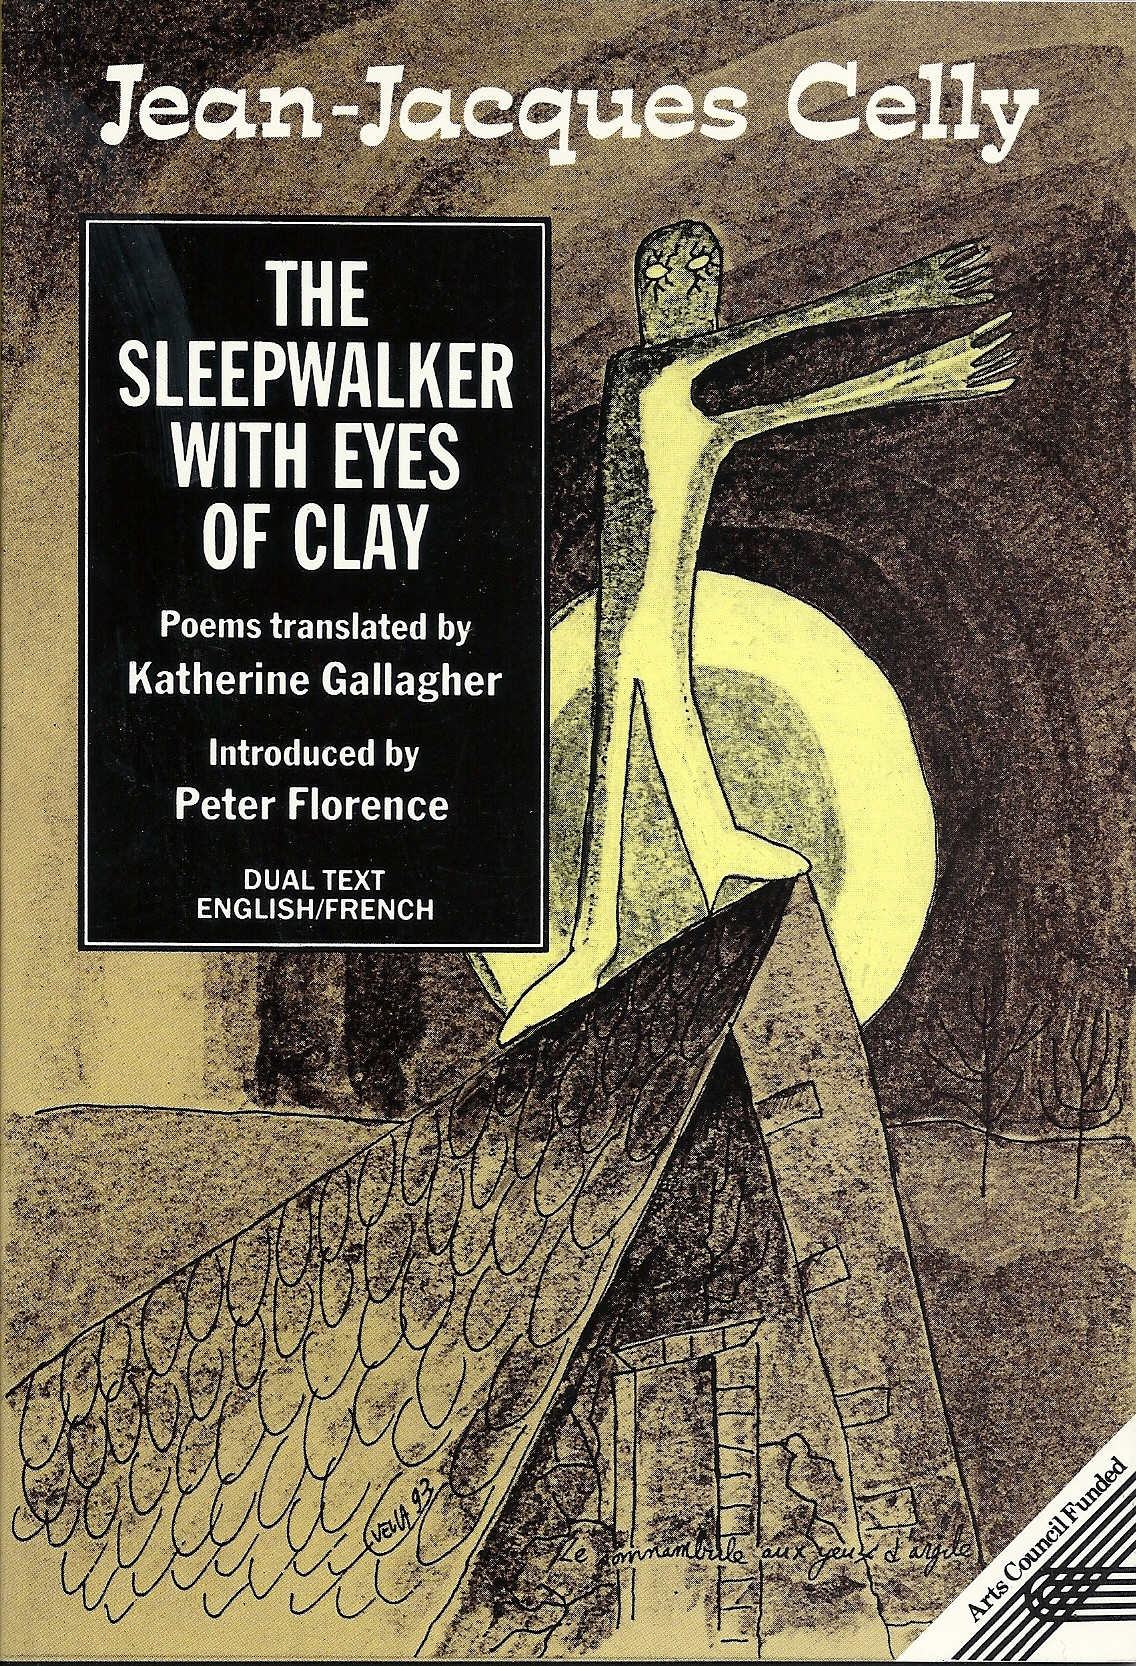 The Sleepwalker with Eyes of Clay